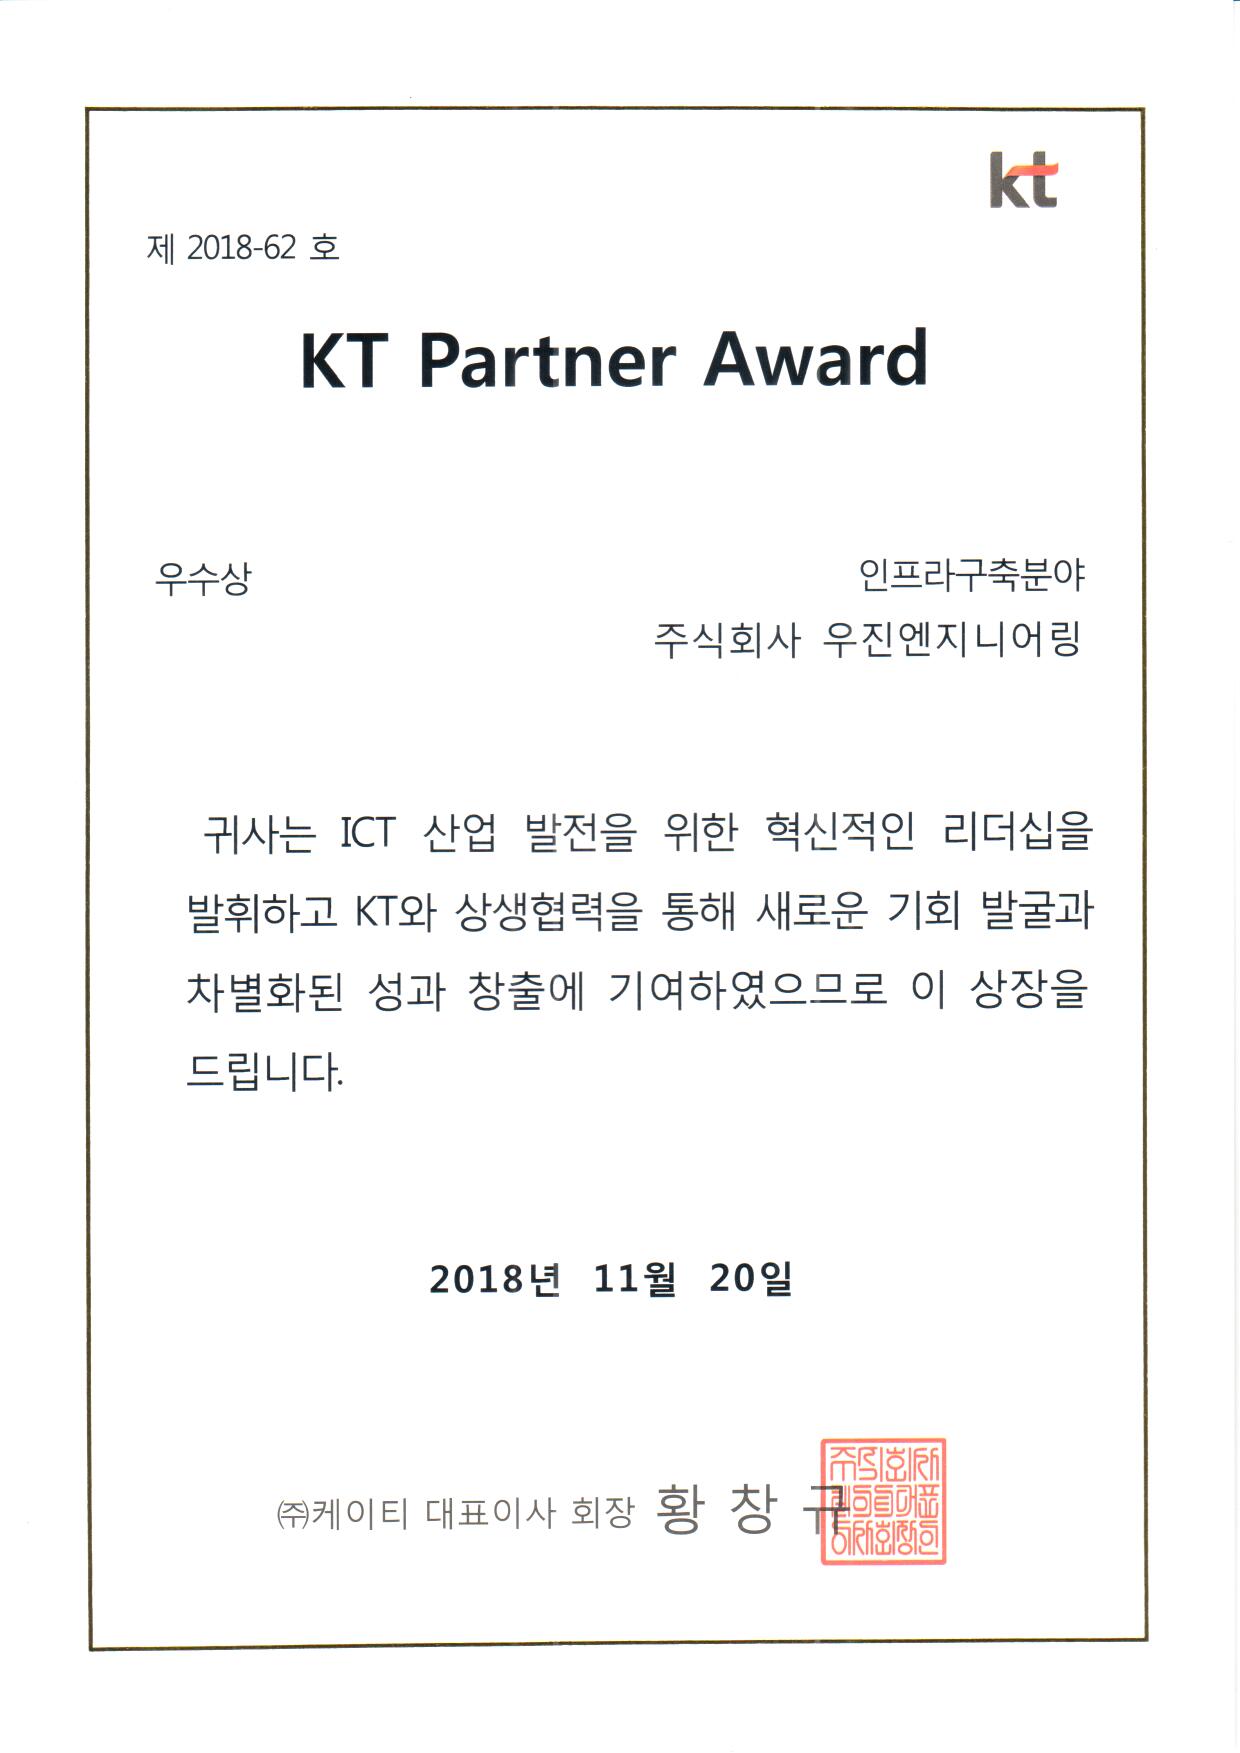 KT Partner Award 우수상